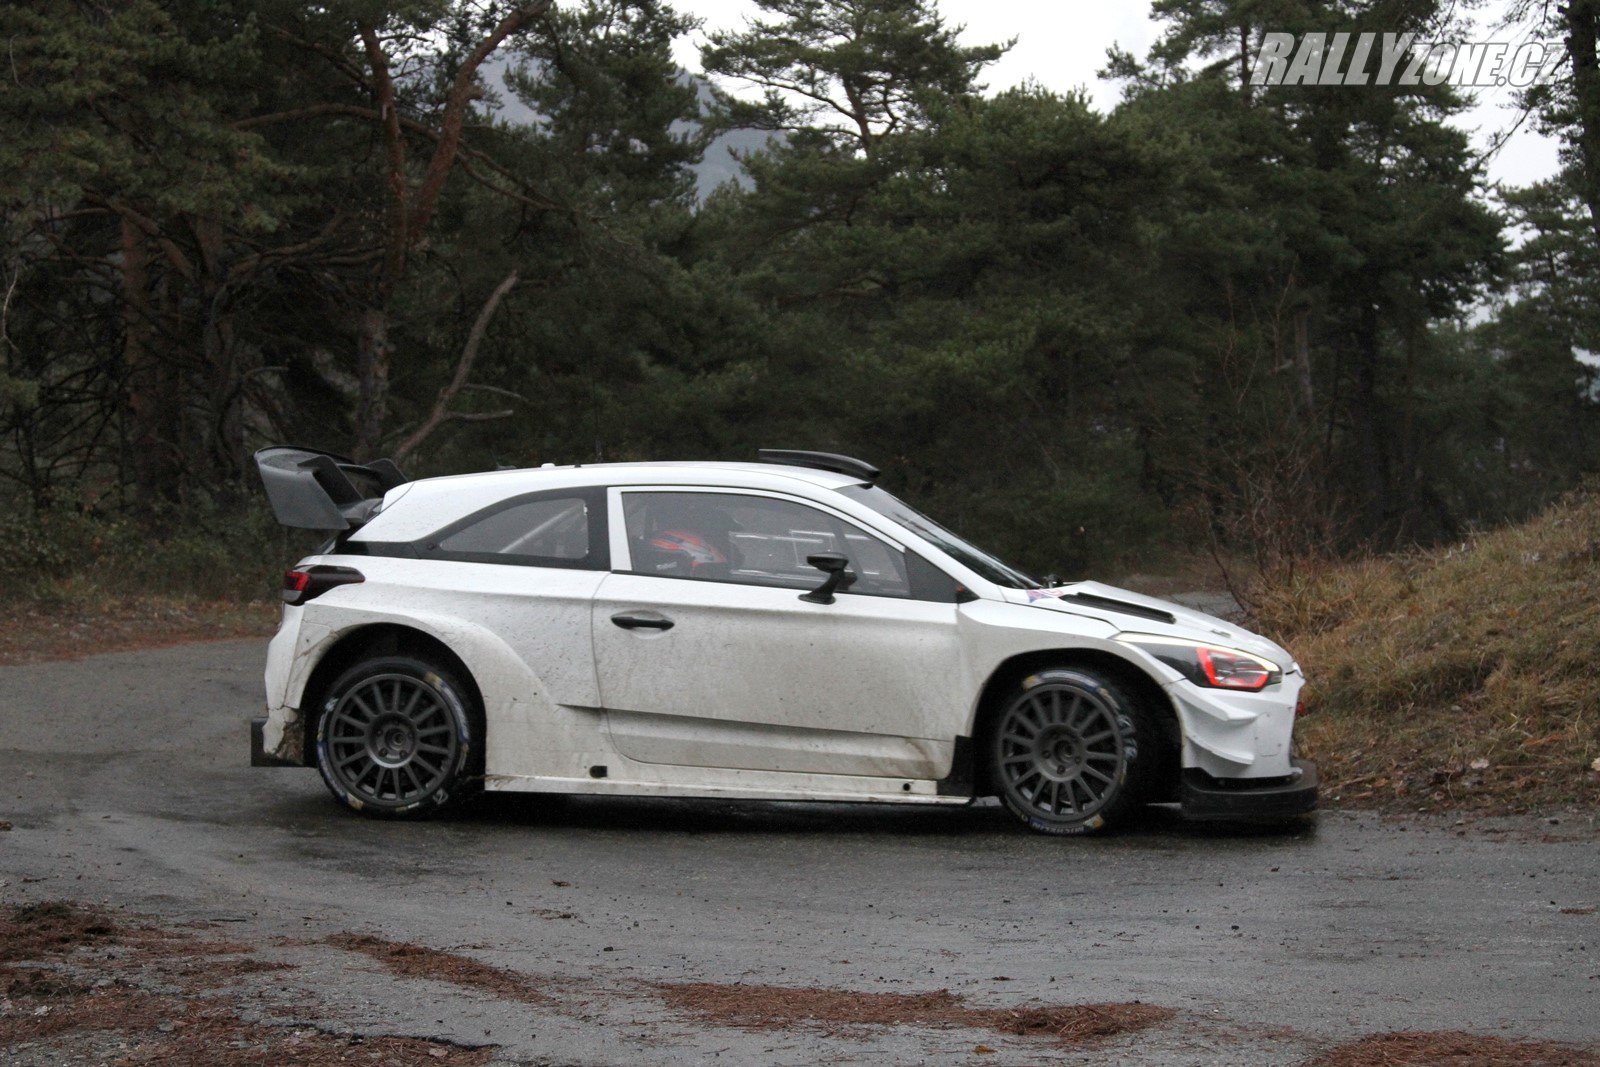 Hyundai i20 Coupe WRC